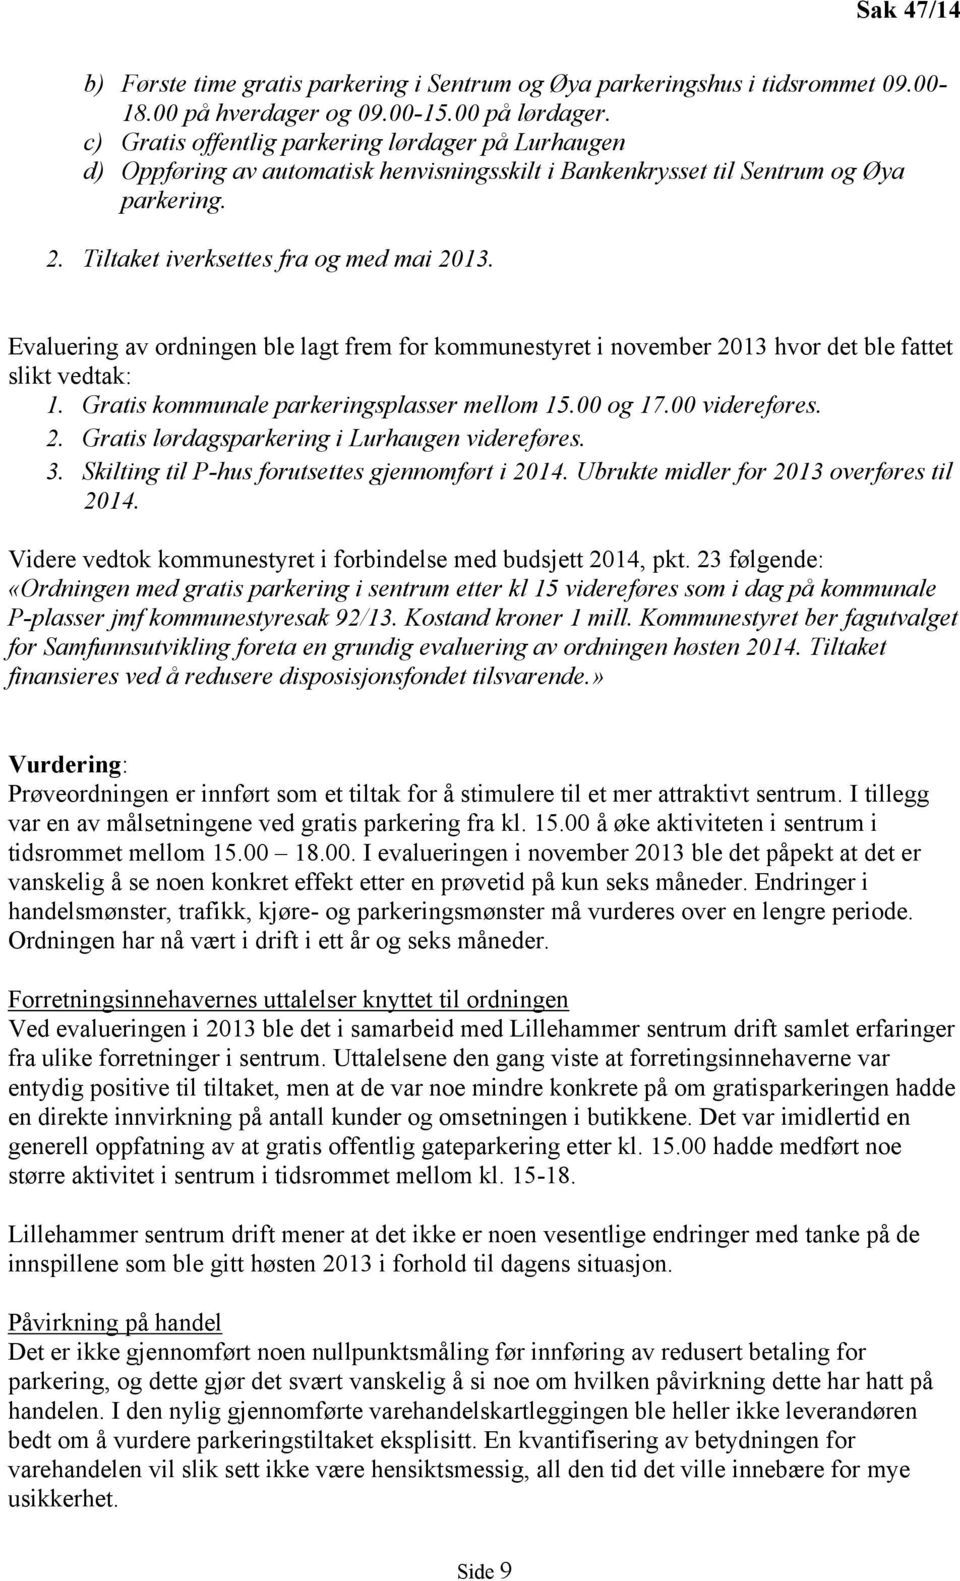 Evaluering av ordningen ble lagt frem for kommunestyret i november 2013 hvor det ble fattet slikt vedtak: 1. Gratis kommunale parkeringsplasser mellom 15.00 og 17.00 videreføres. 2. Gratis lørdagsparkering i Lurhaugen videreføres.